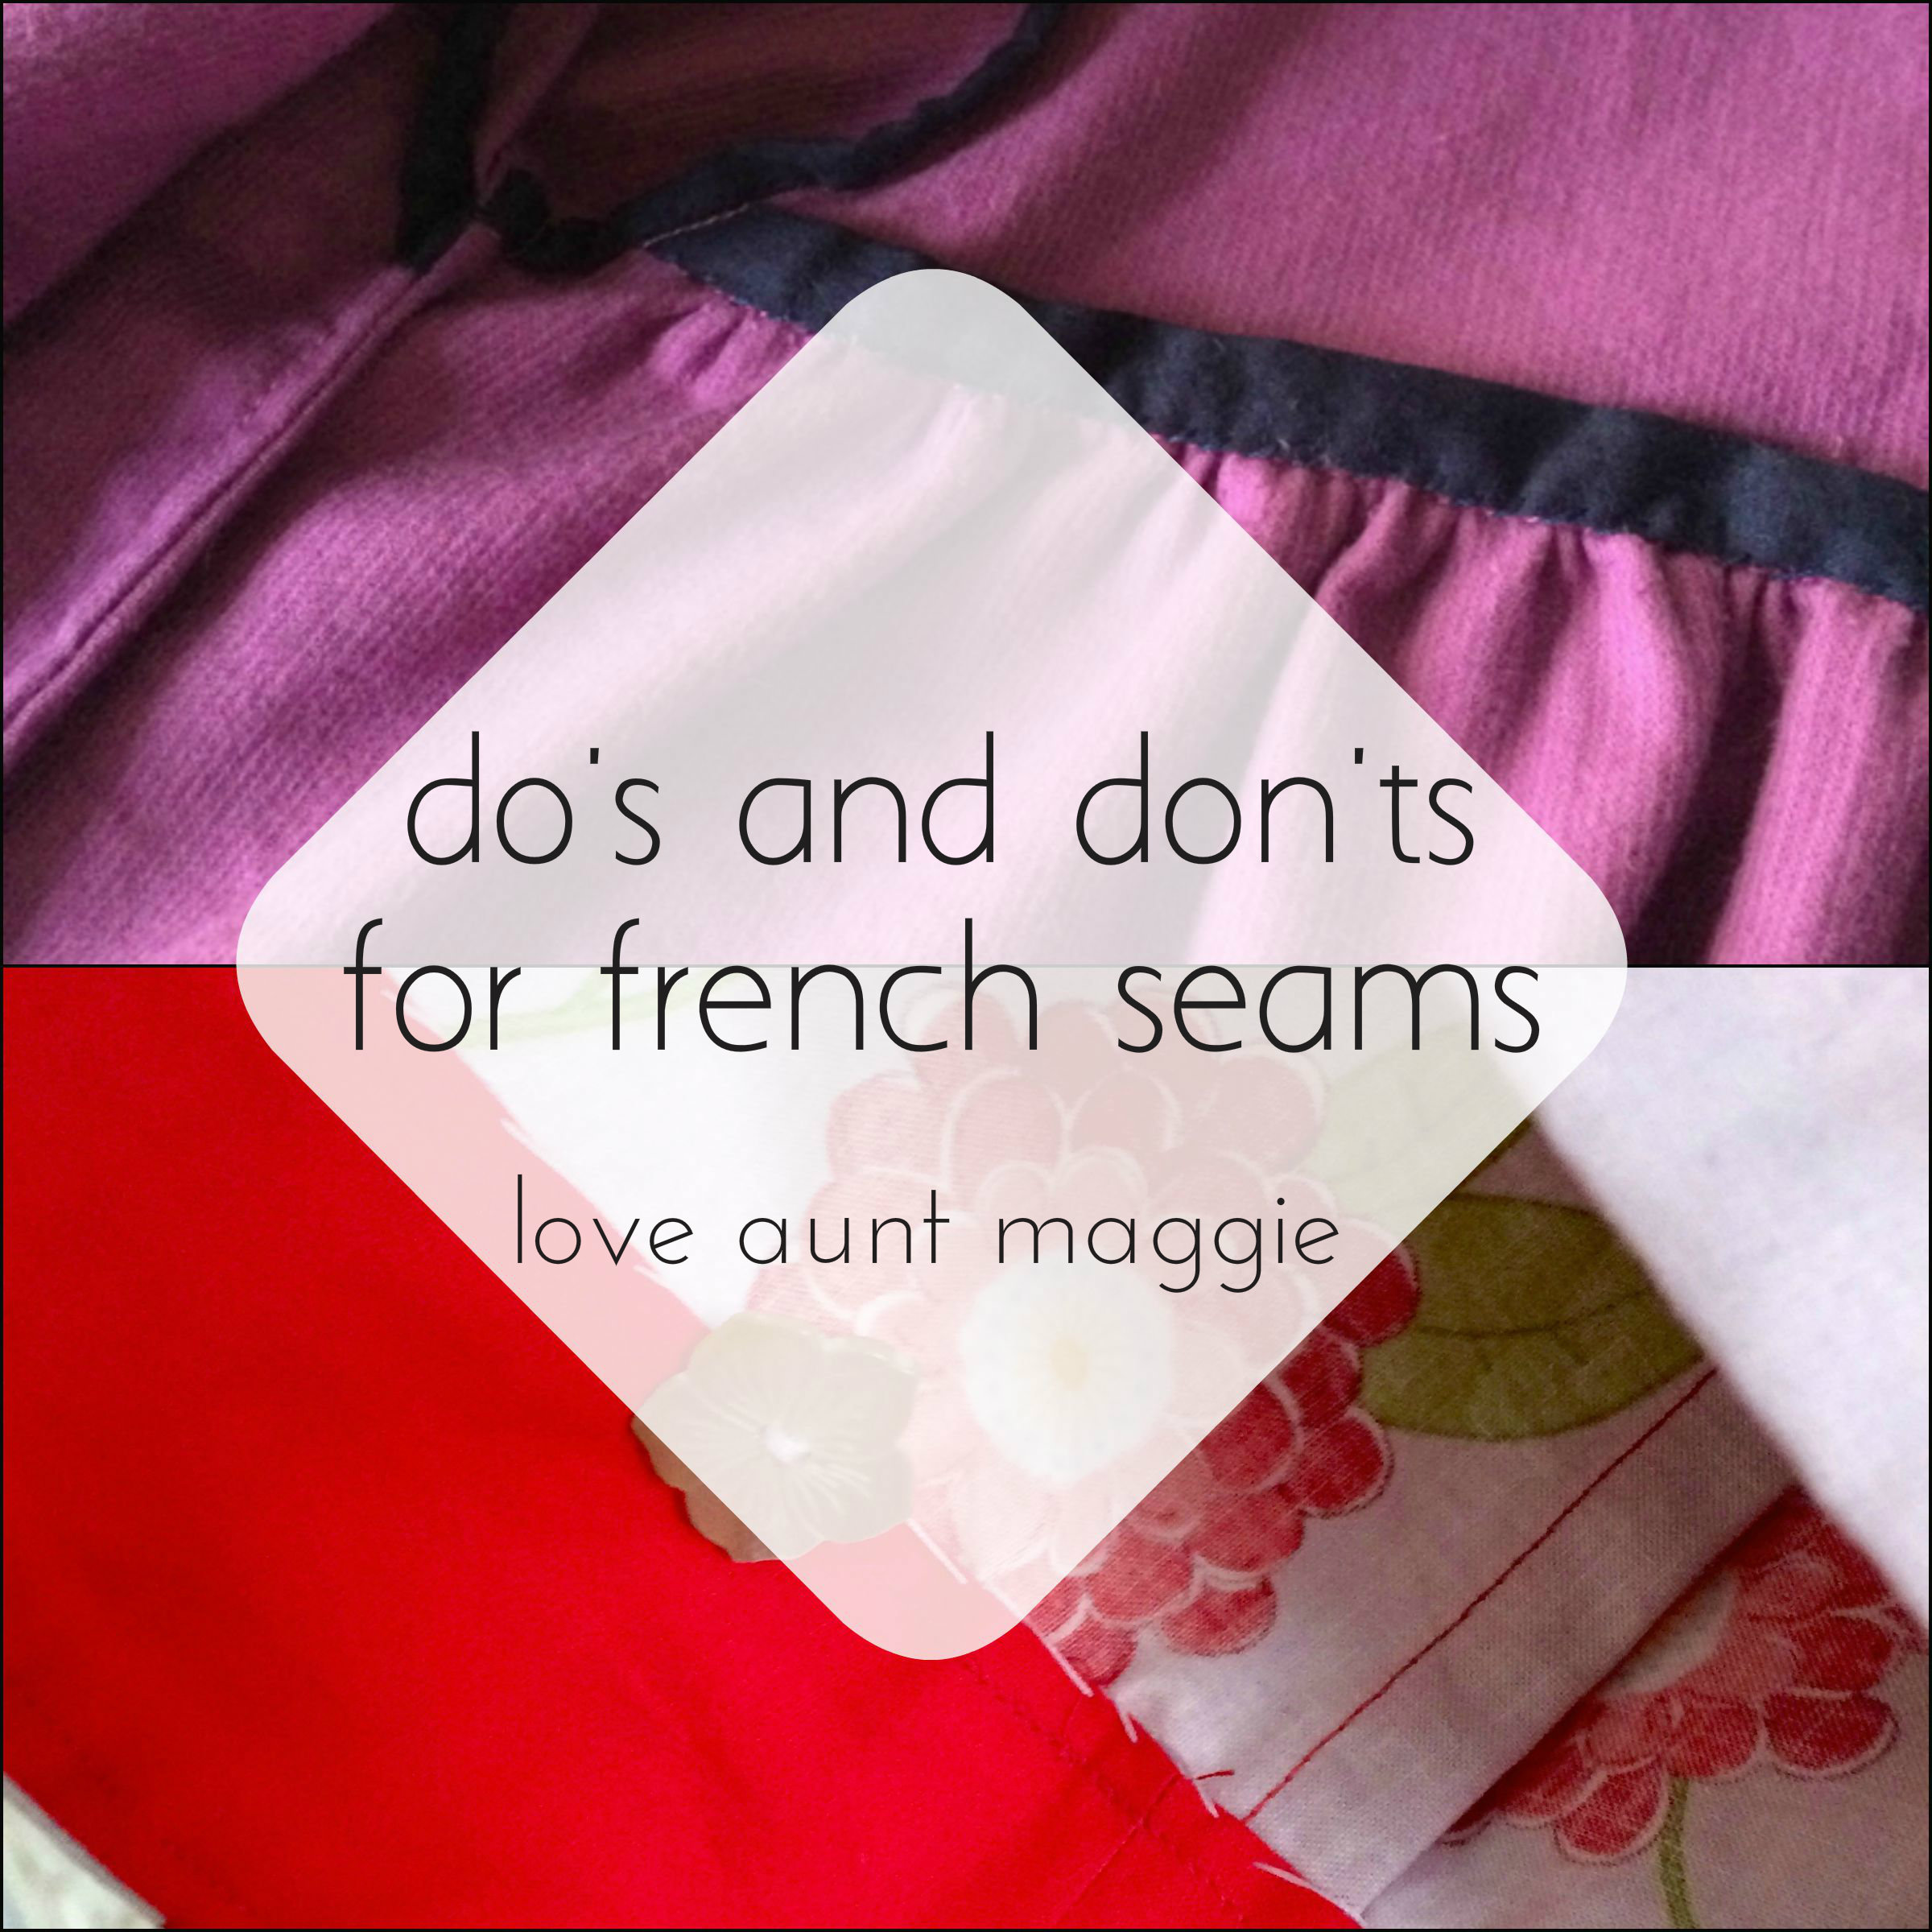 love aunt maggie - french seam thumbnail.jpg